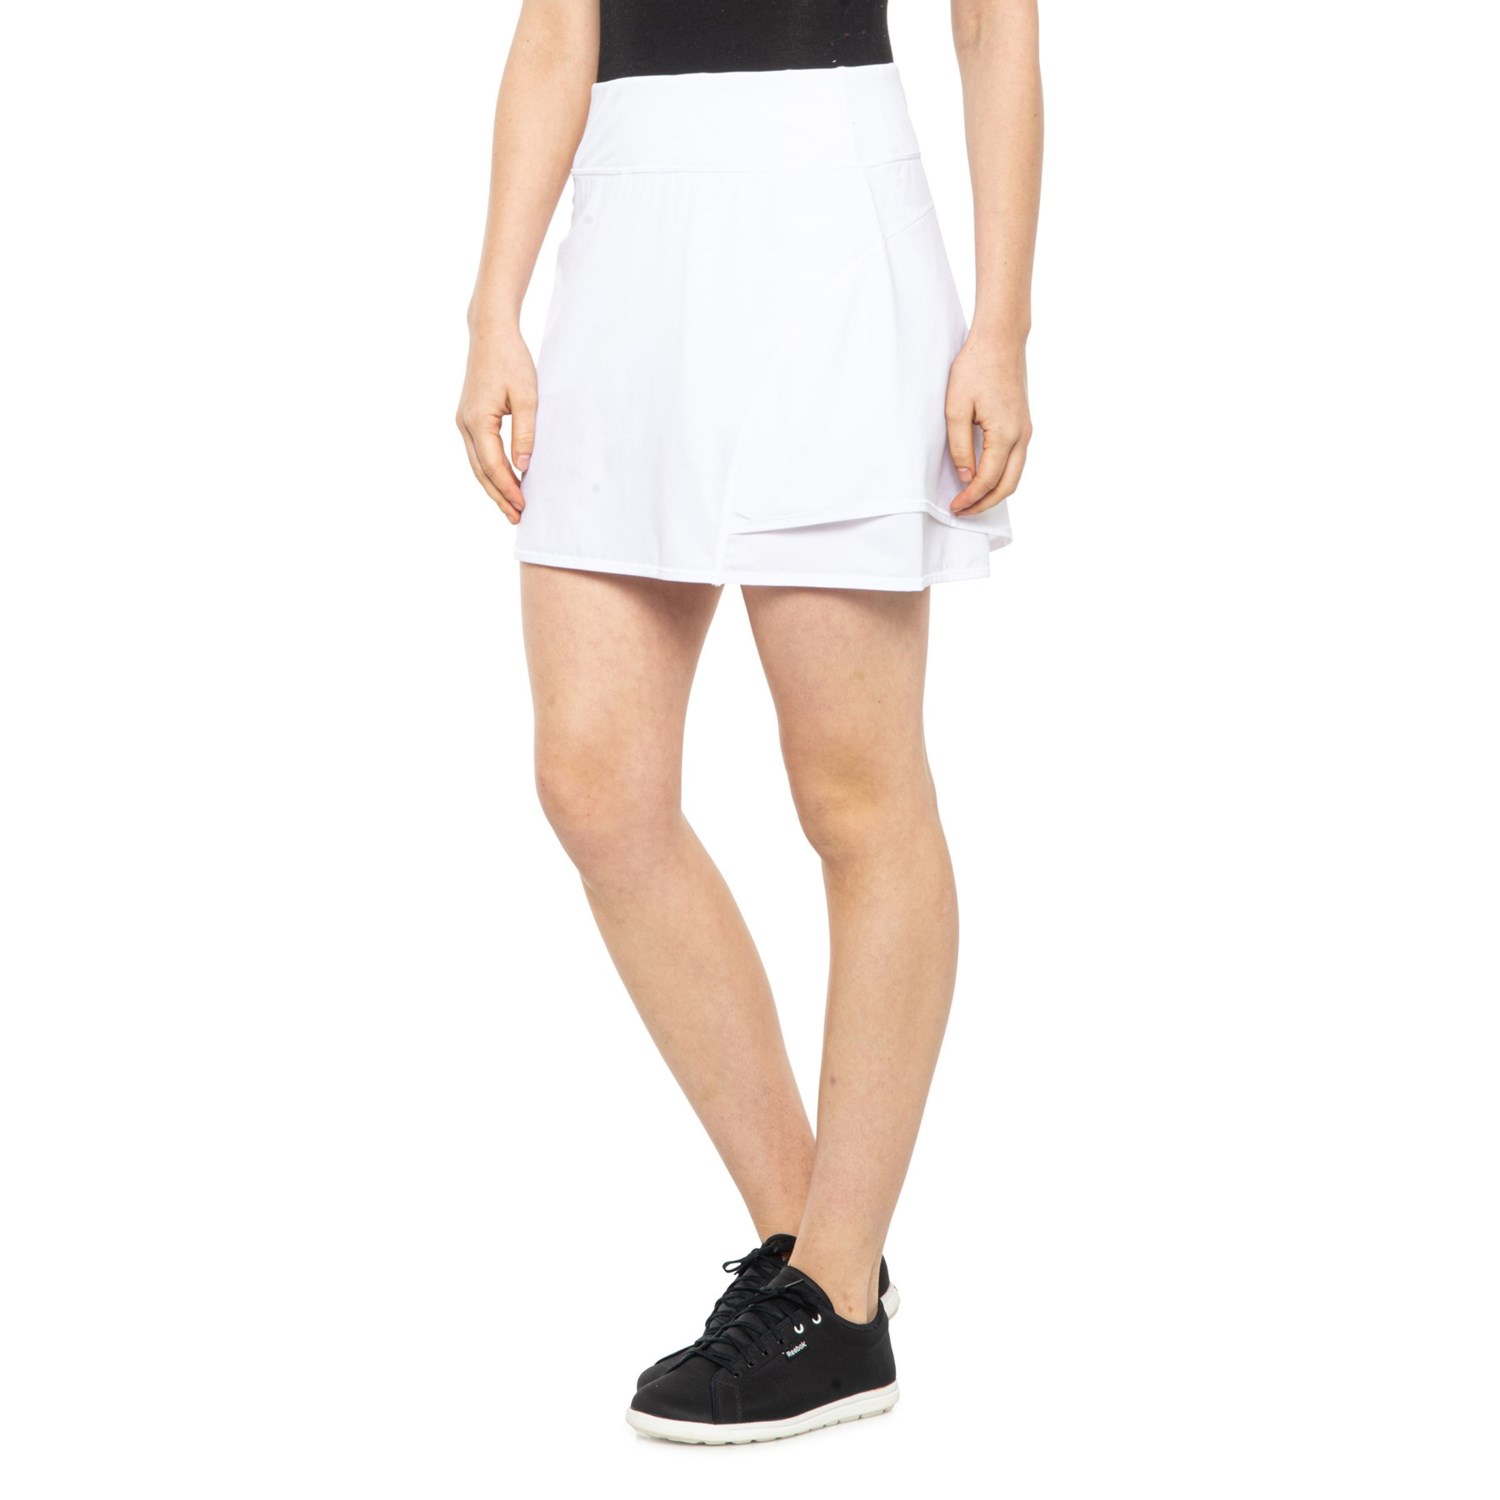 kyodan white tennis skirt